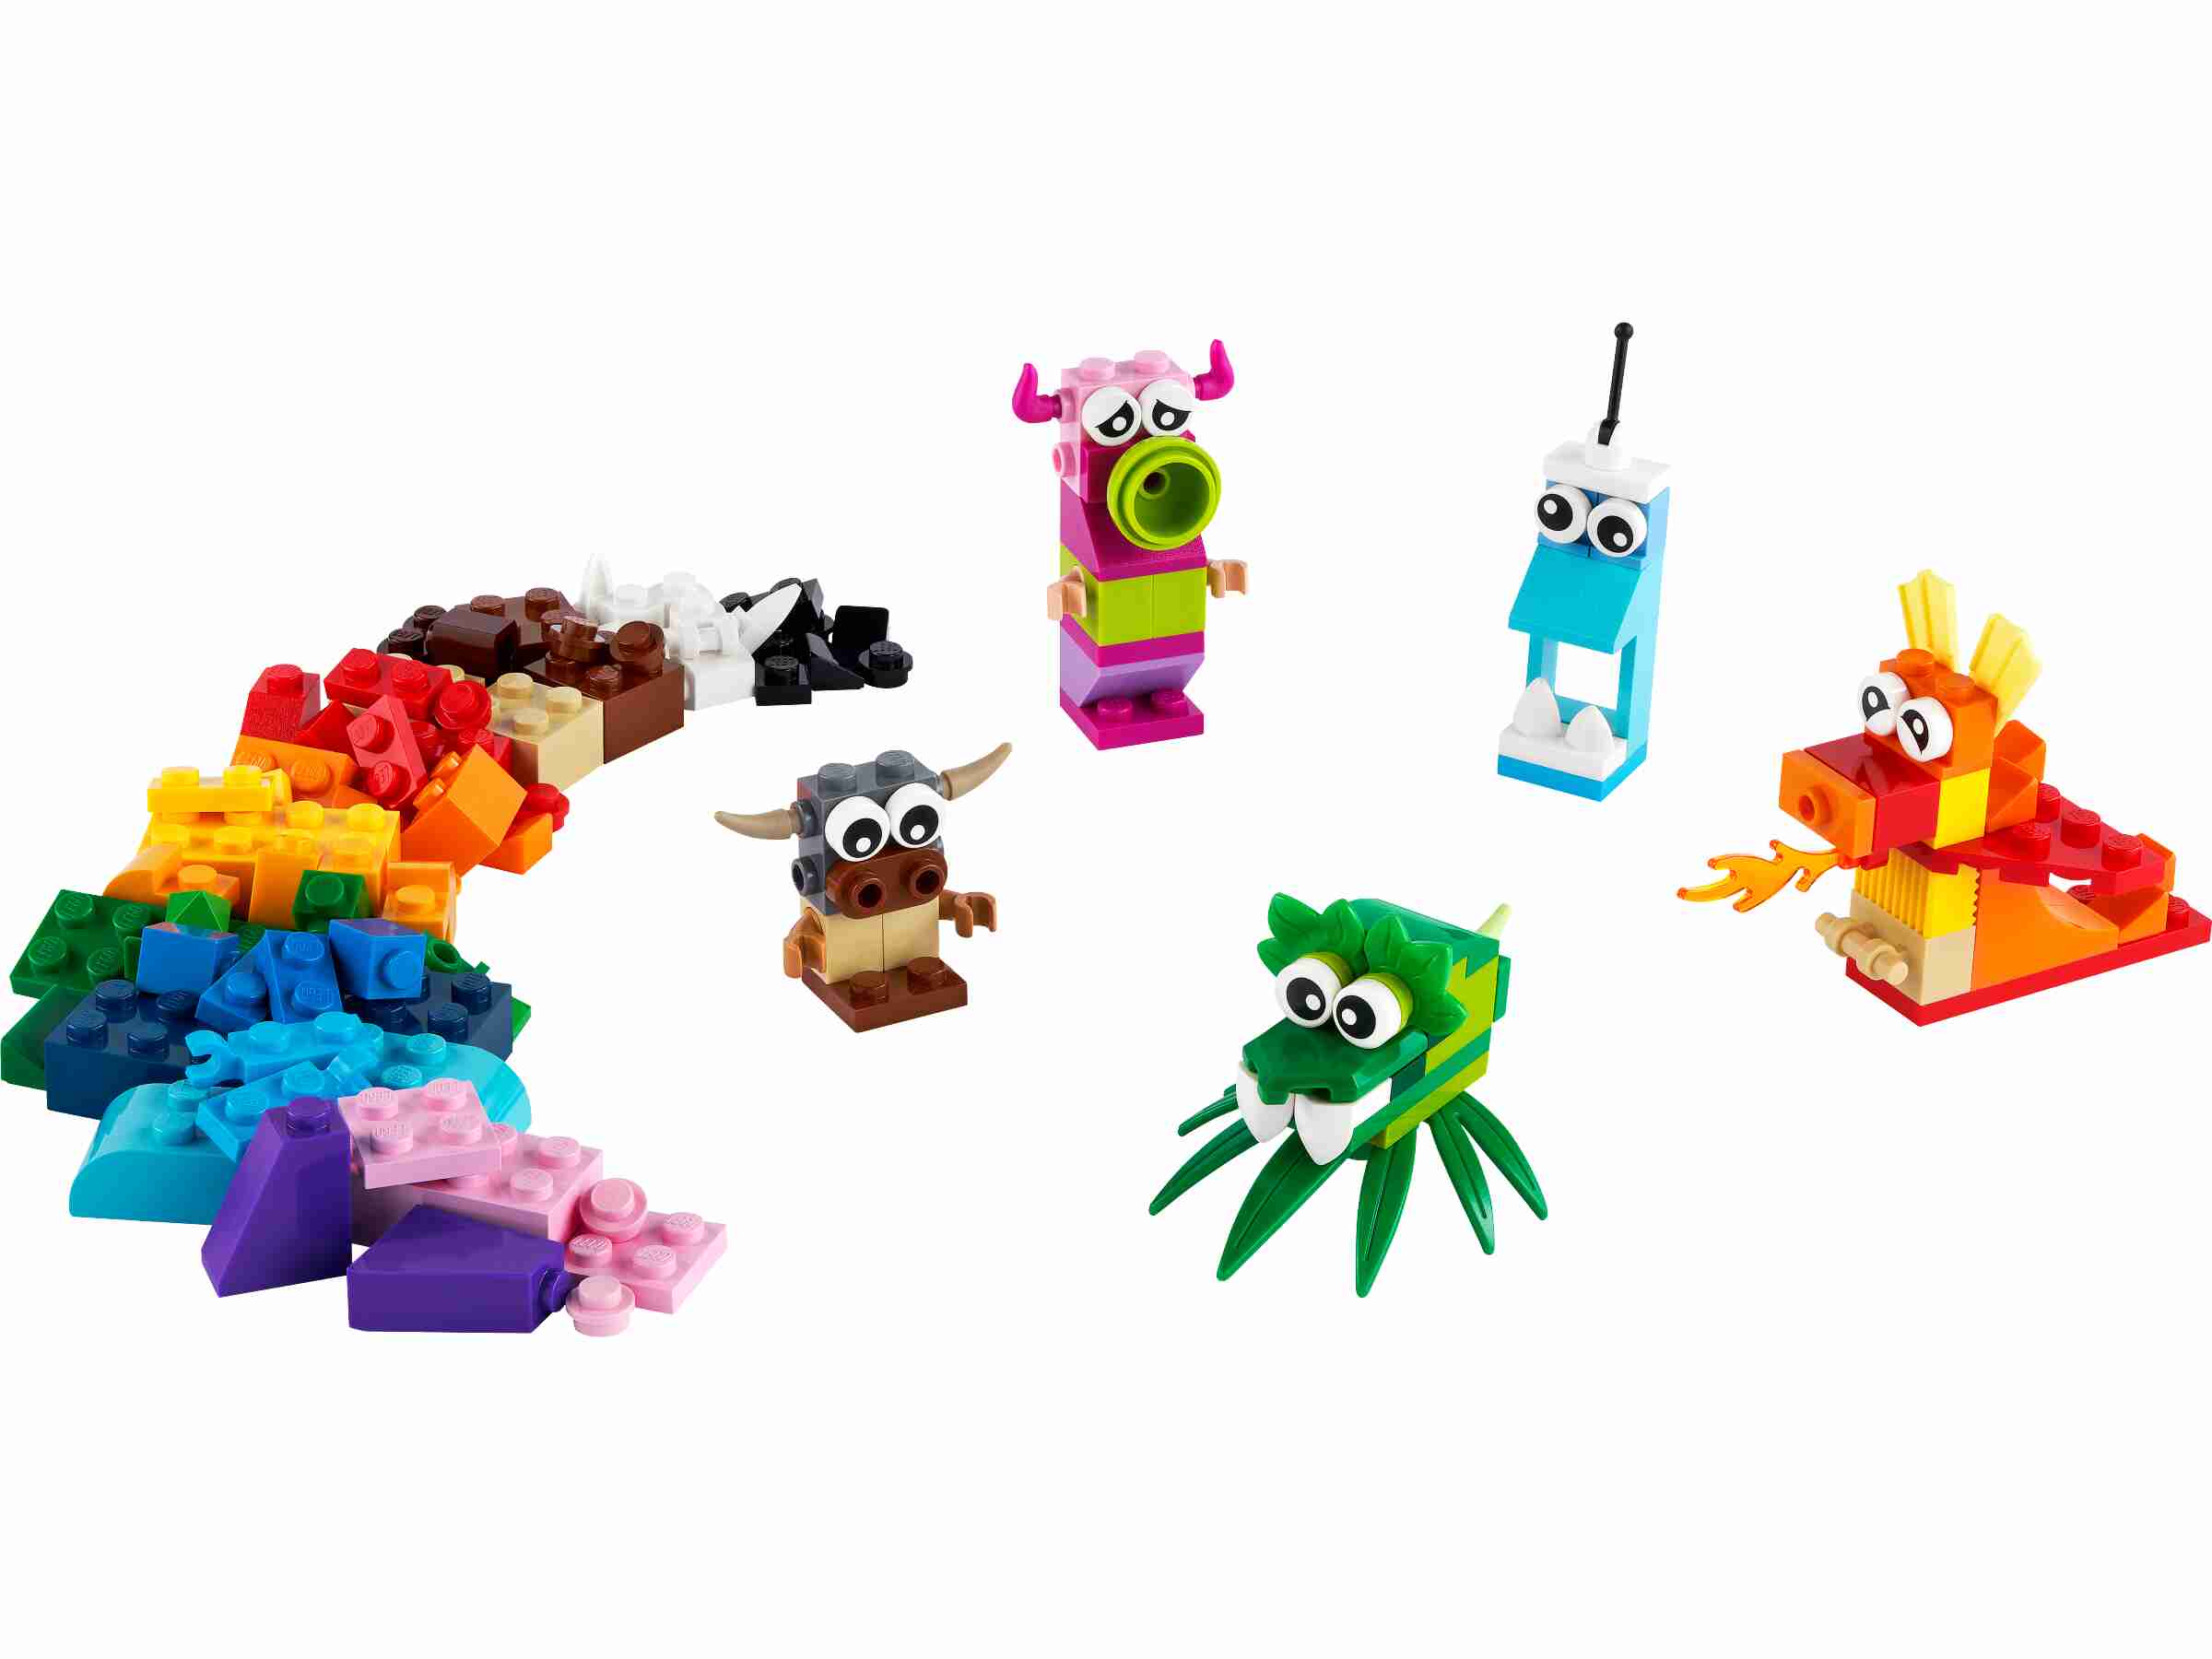 LEGO Toys 11017 Monsters, build Lobigo.co.uk: Classic 5 Creative monster toy ideas: